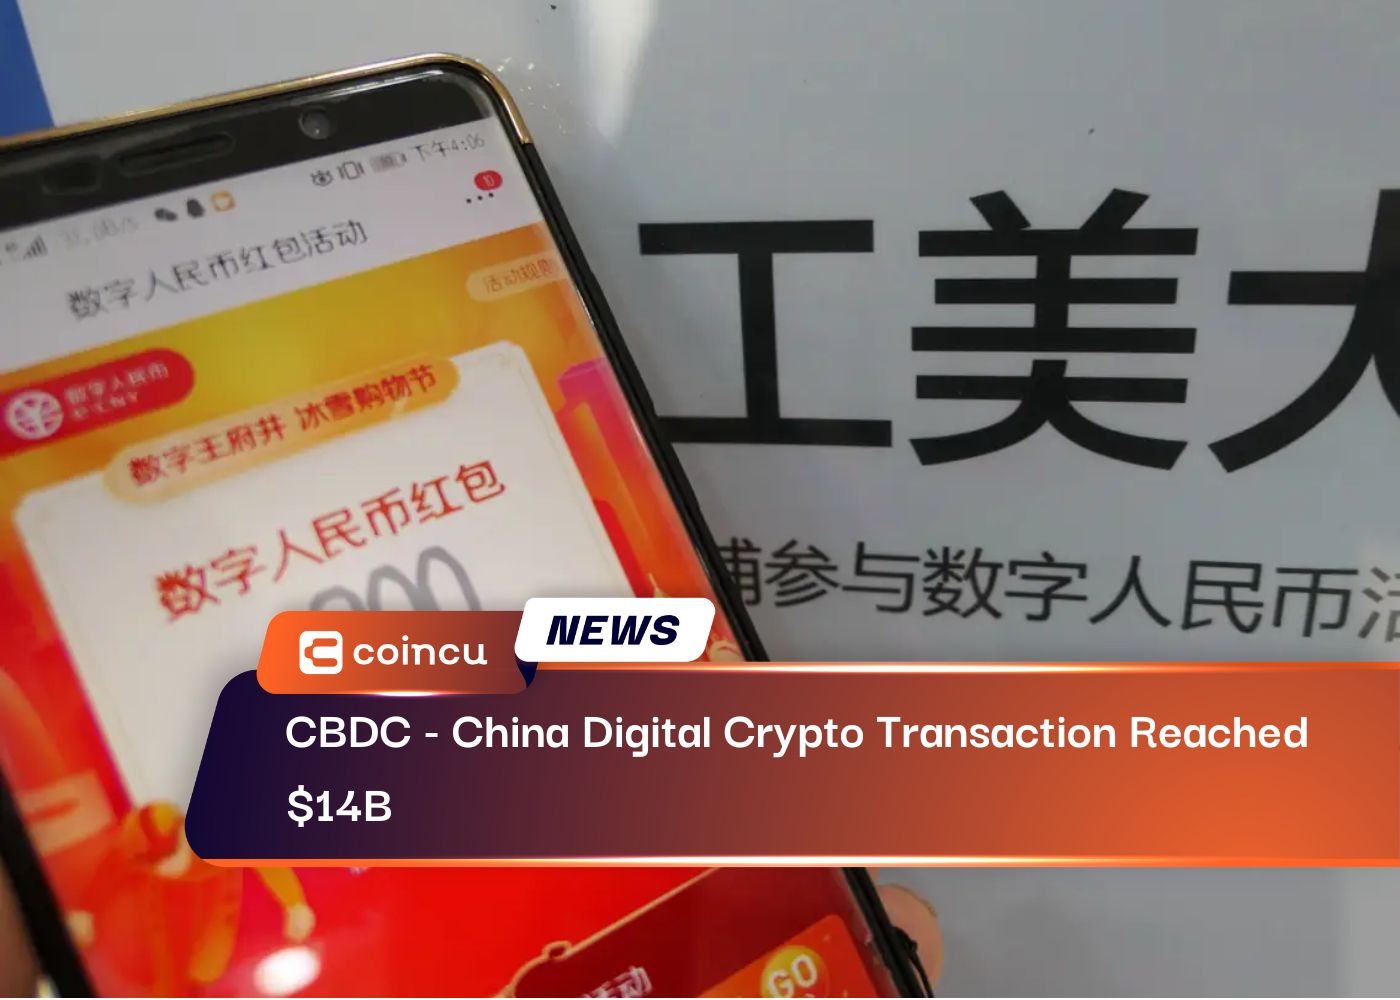 CBDC - China Digital Crypto Transaction Reached $14B